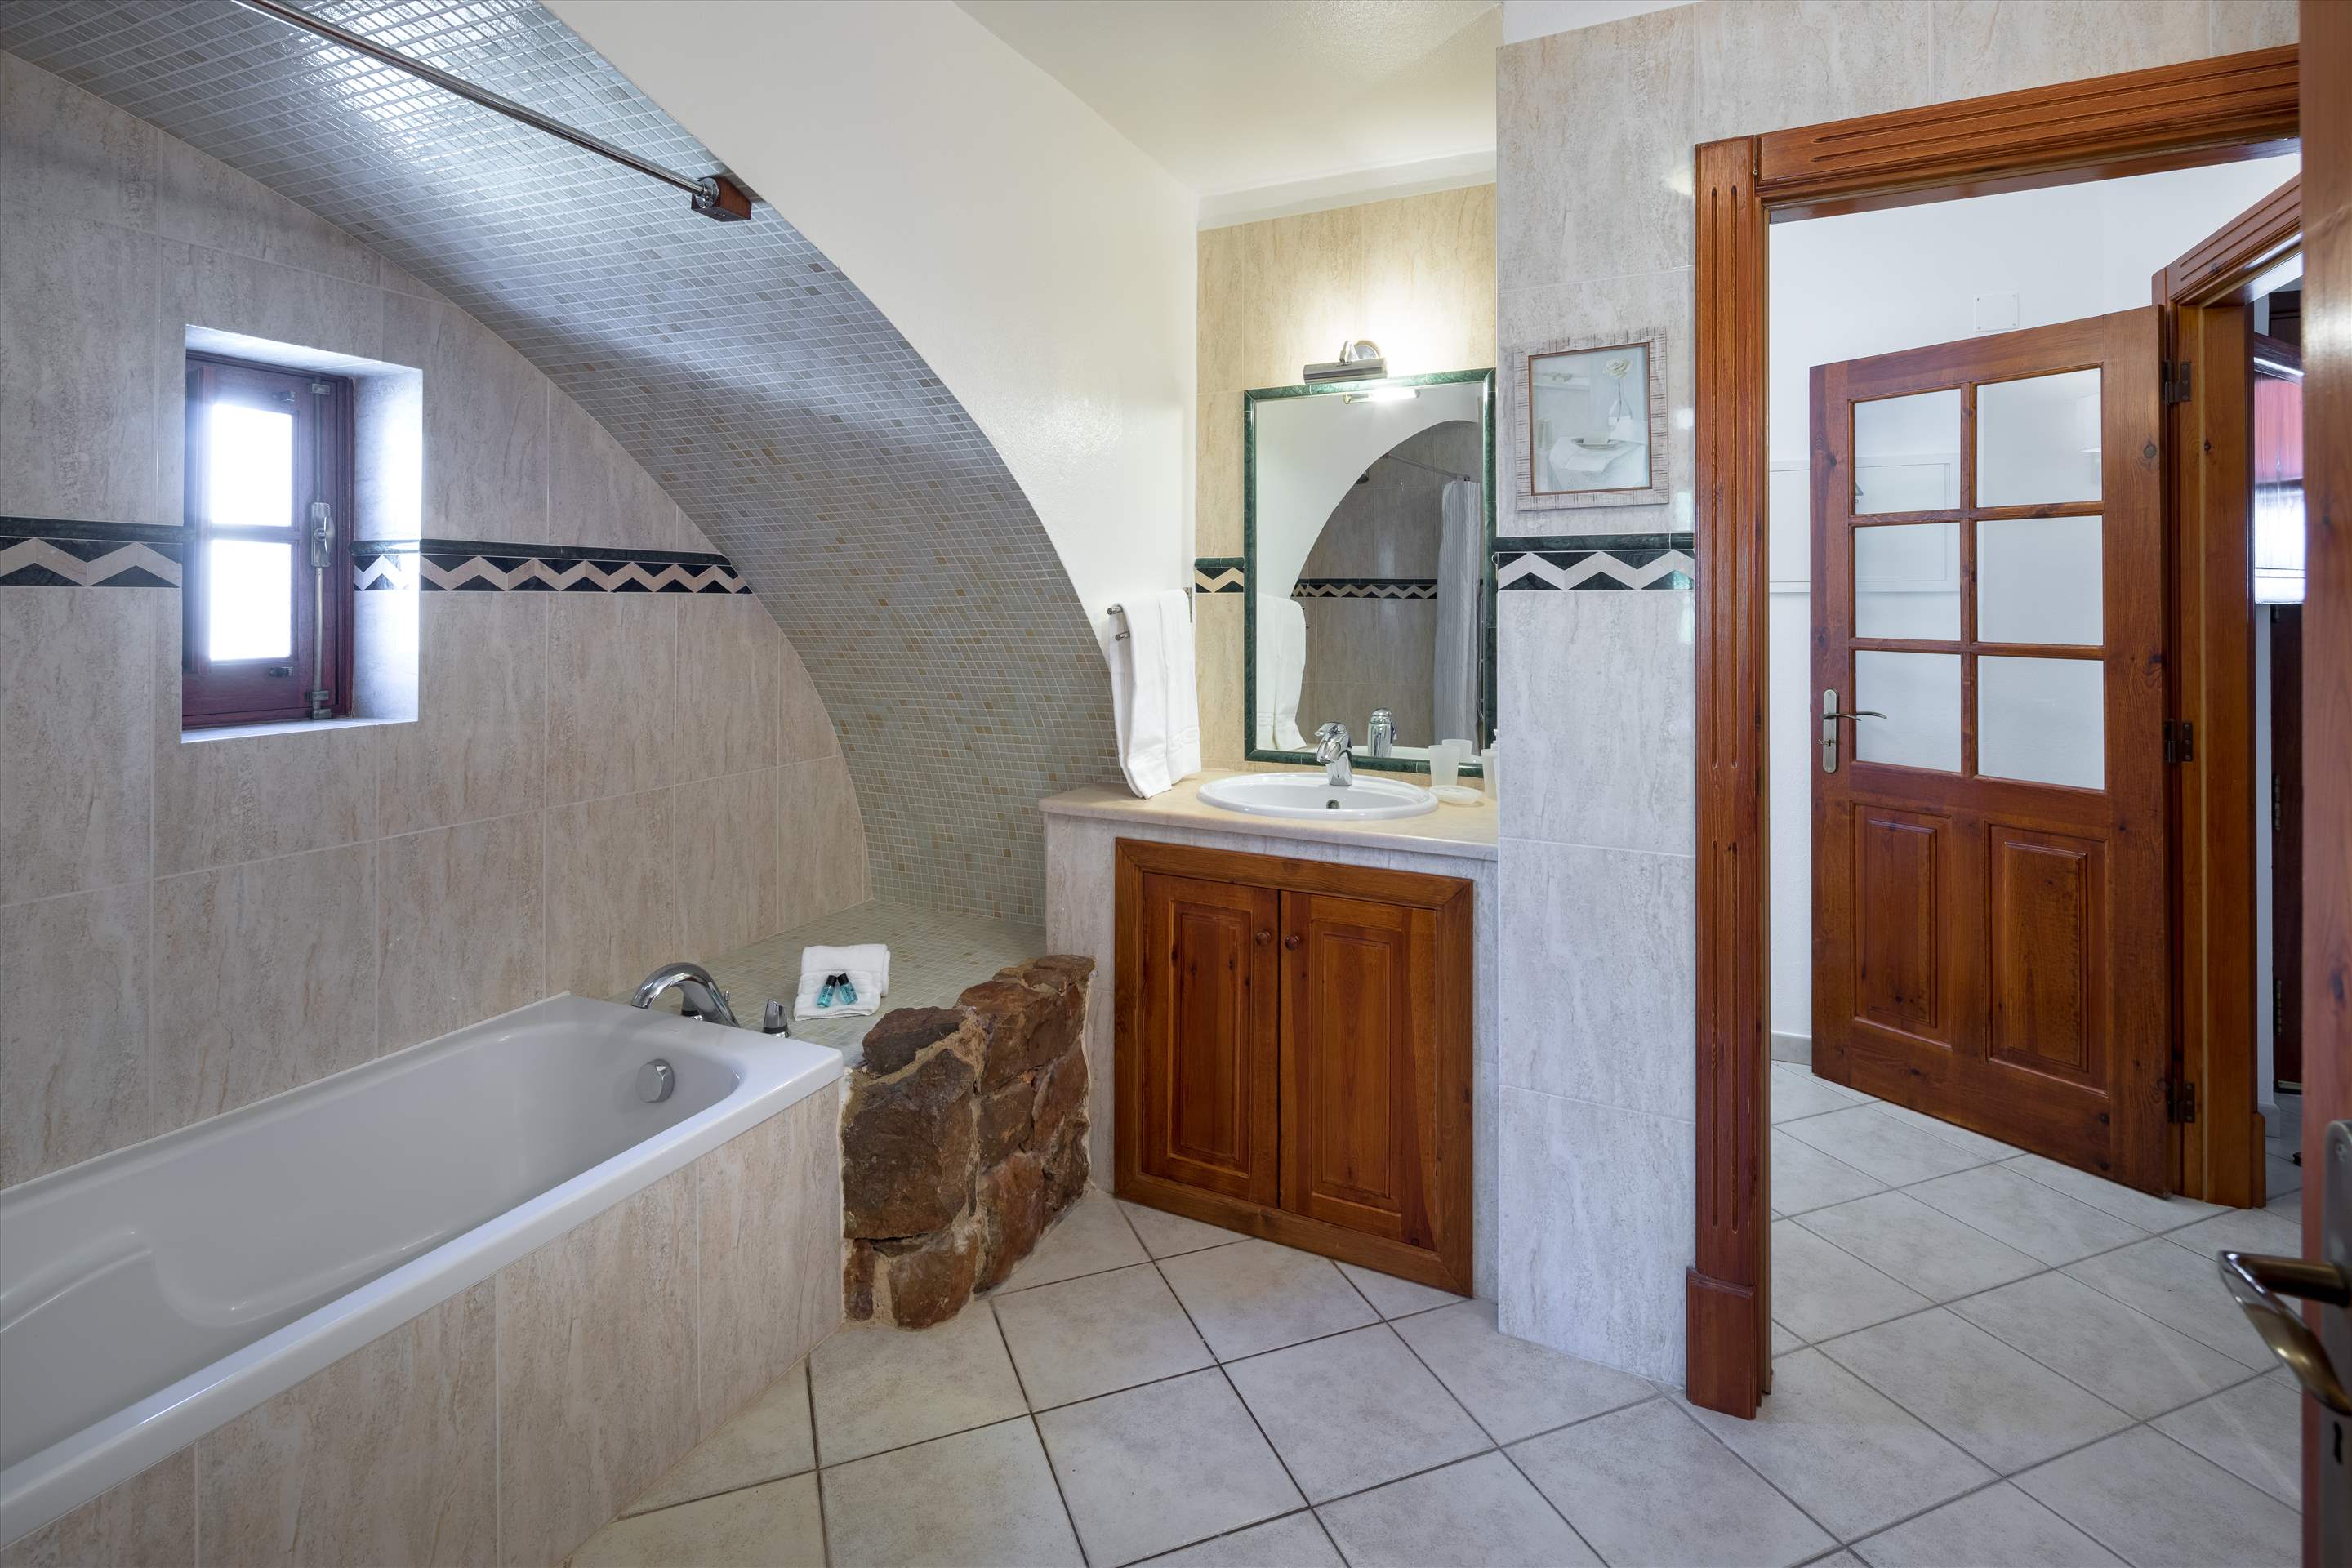 Casa do Ingles, 7-10 persons, 4 bedroom villa in Vilamoura Area, Algarve Photo #13